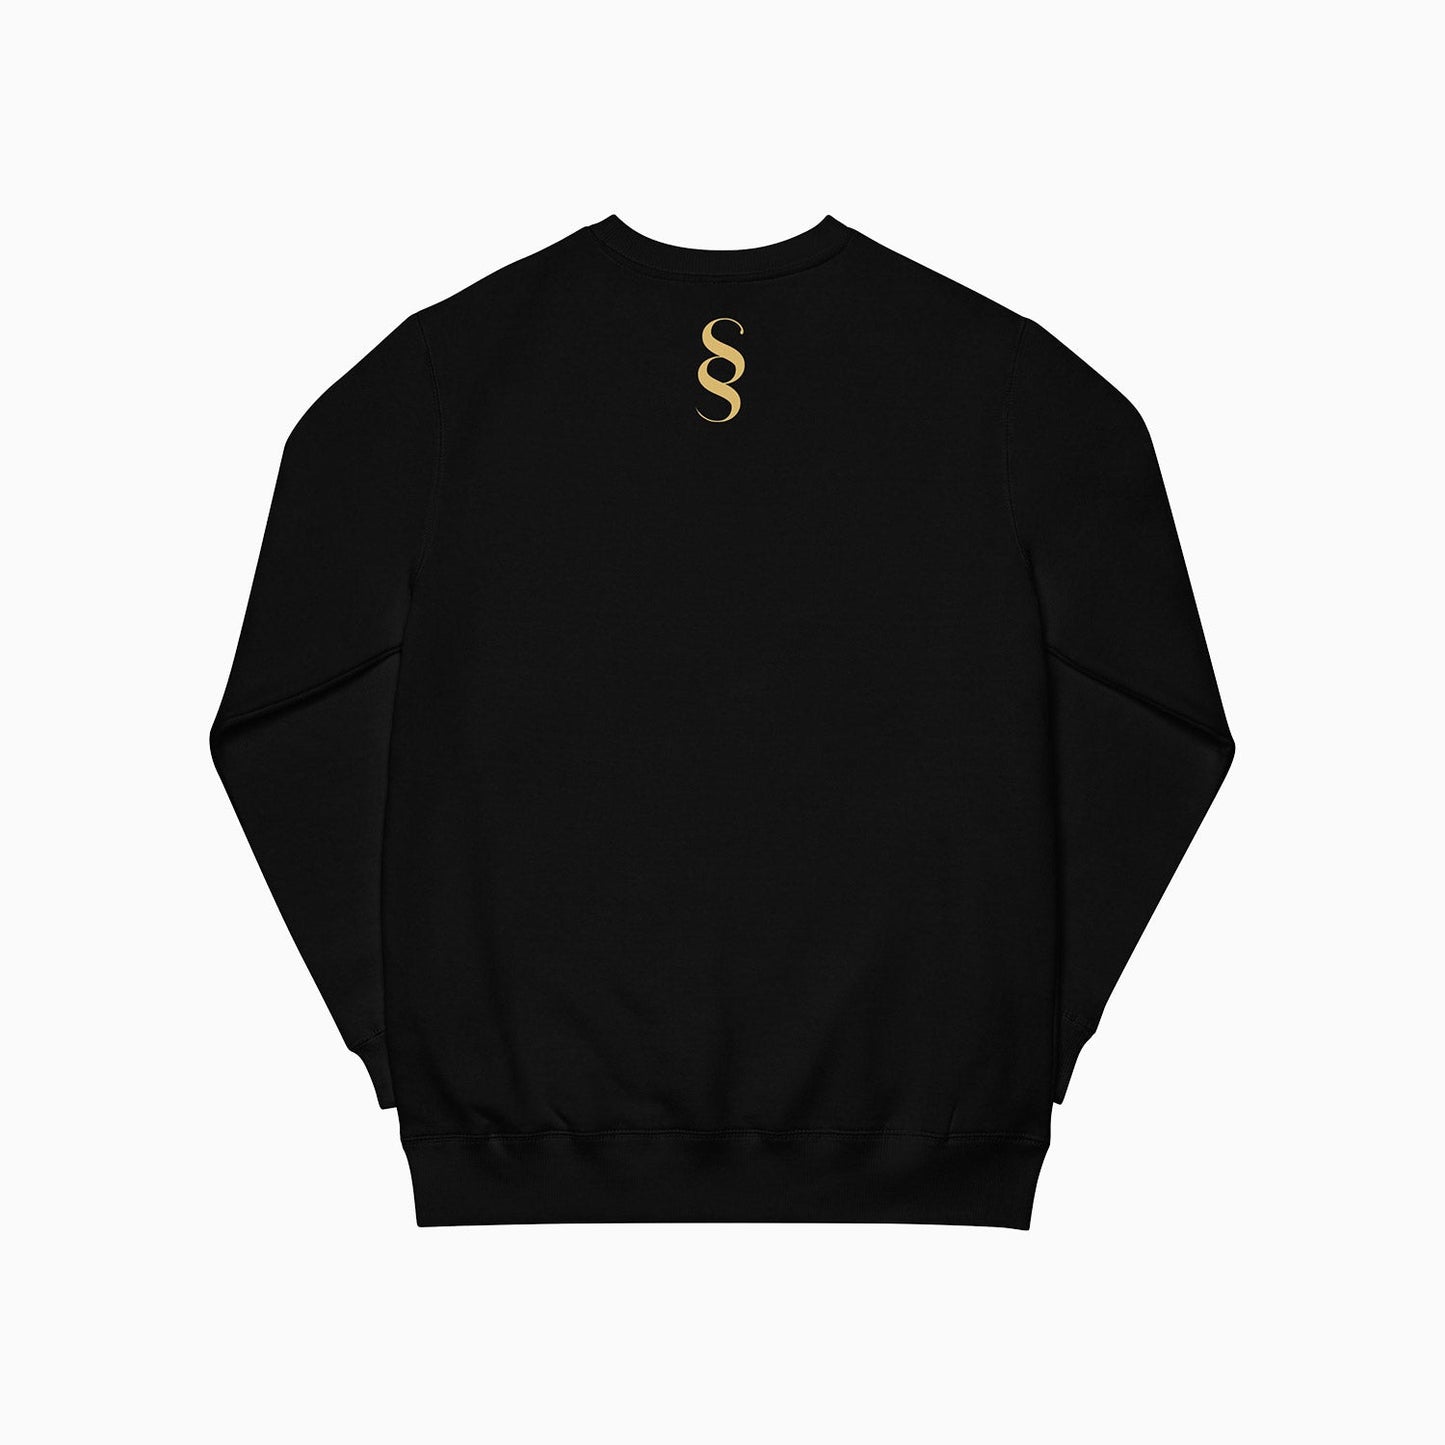 Men's Emblem Printed Black Sweatshirt